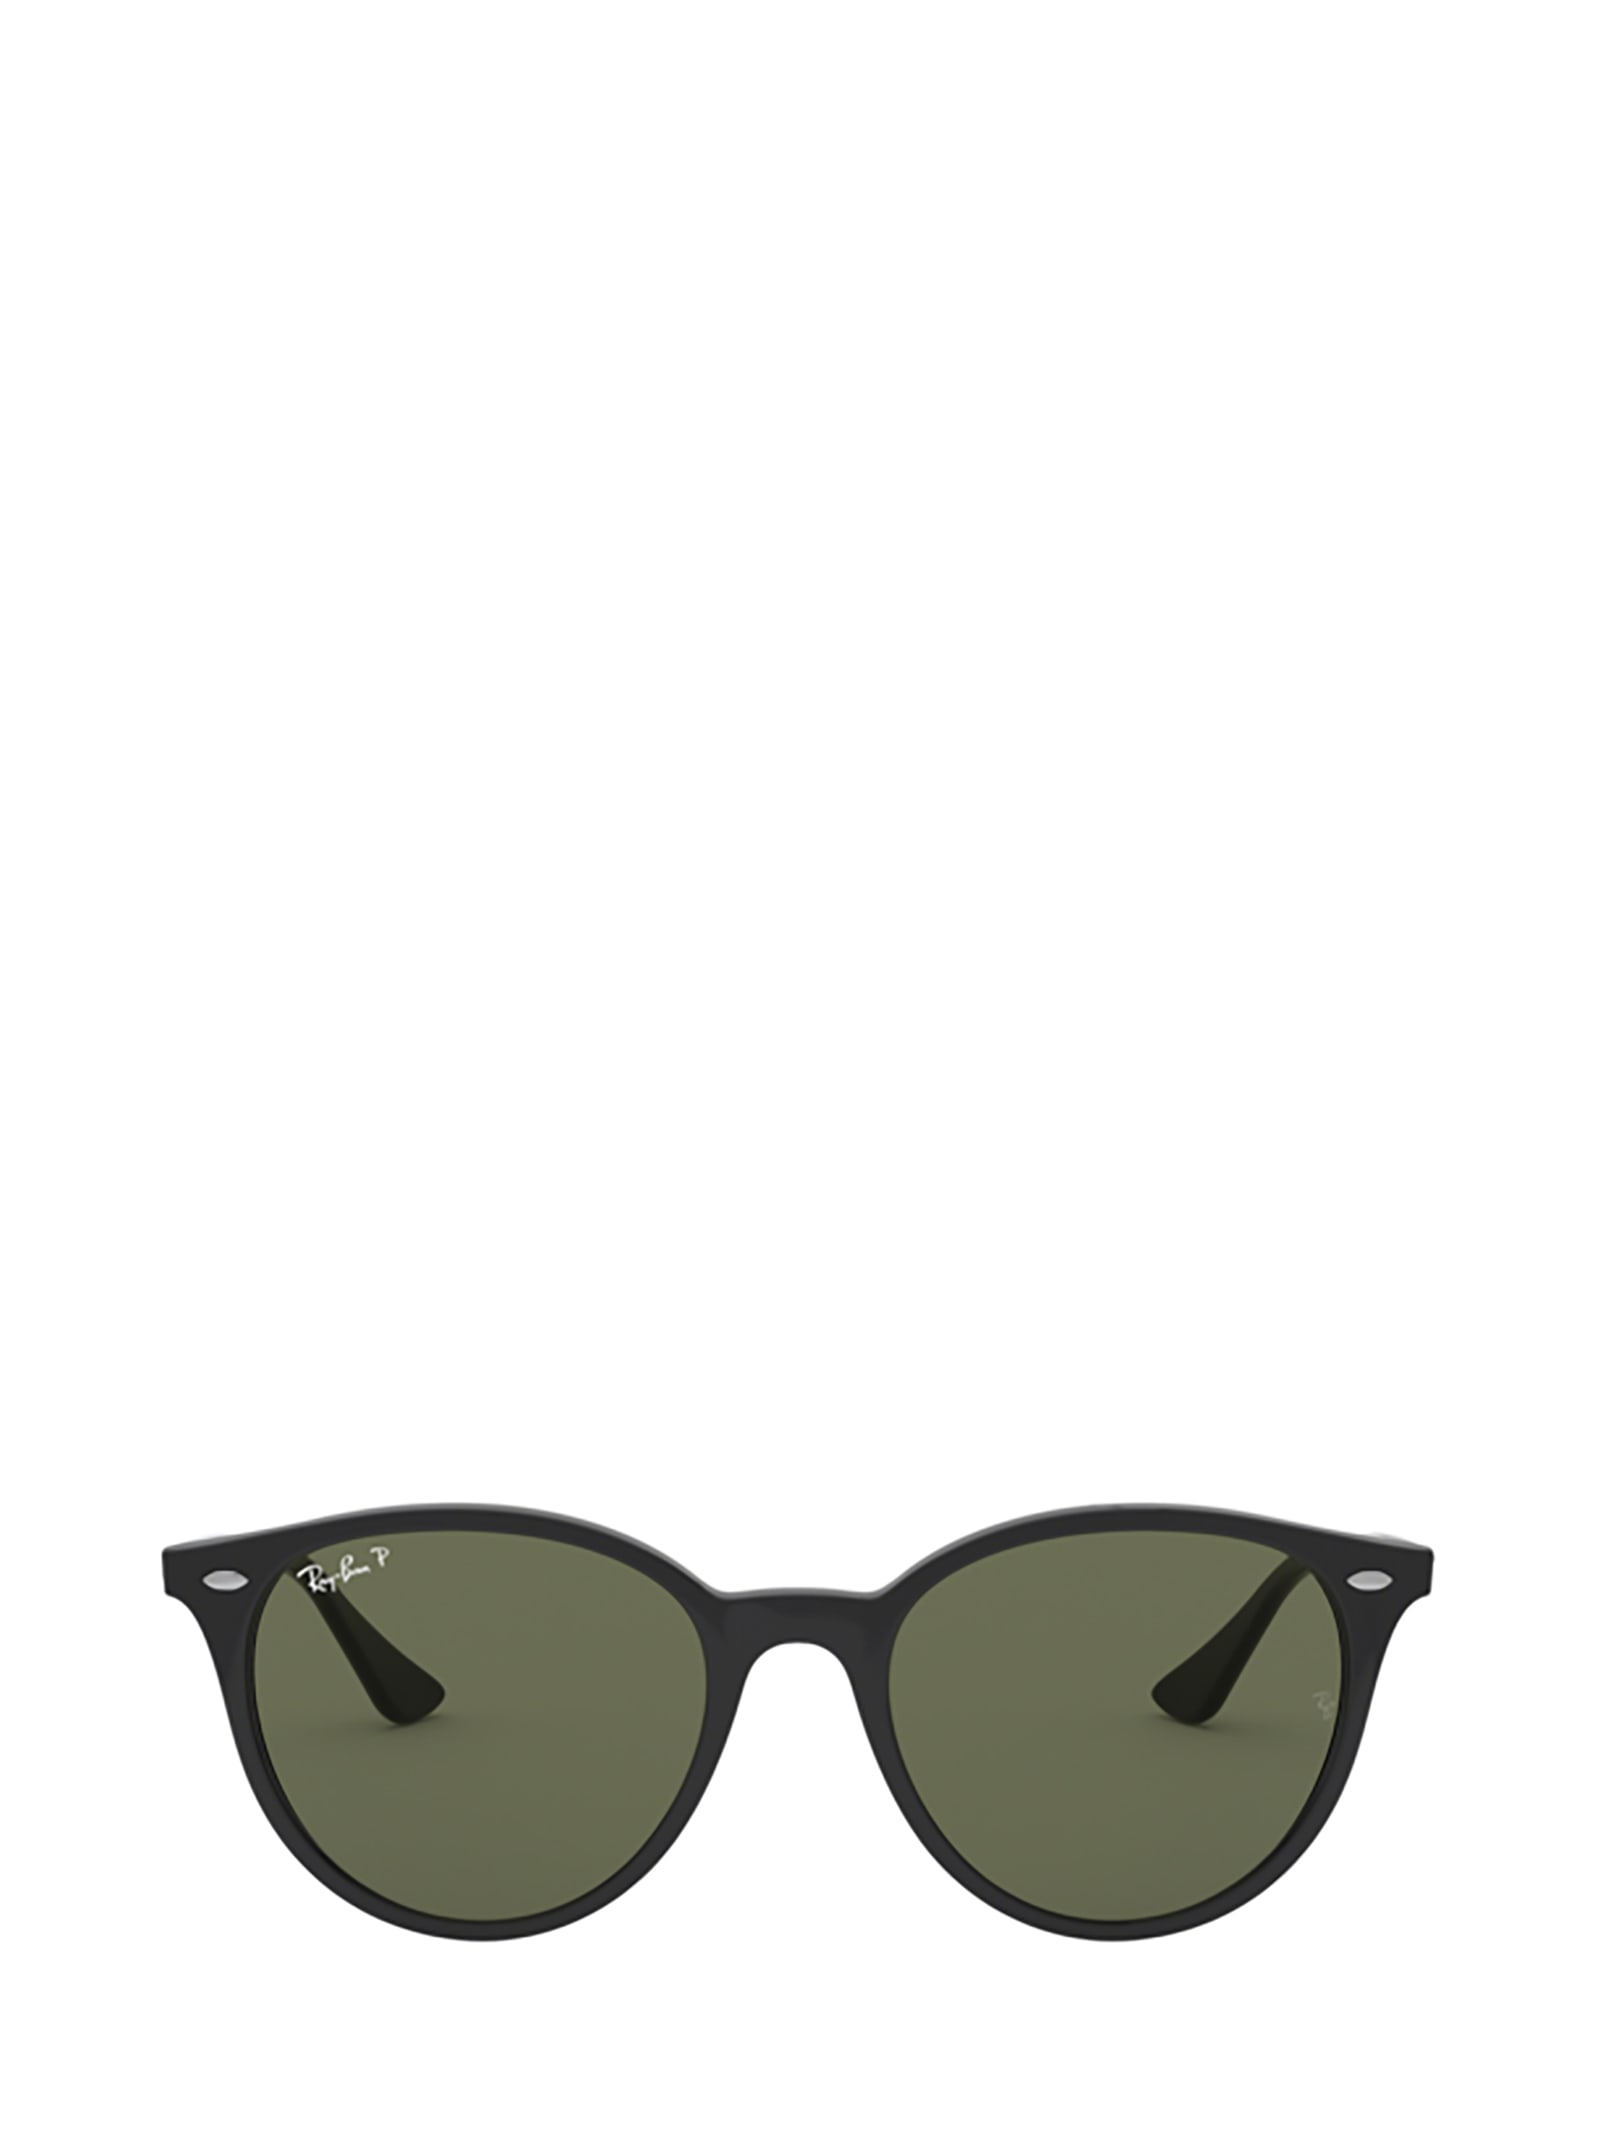 Ray Ban Ray-ban Rb4305 Black Sunglasses